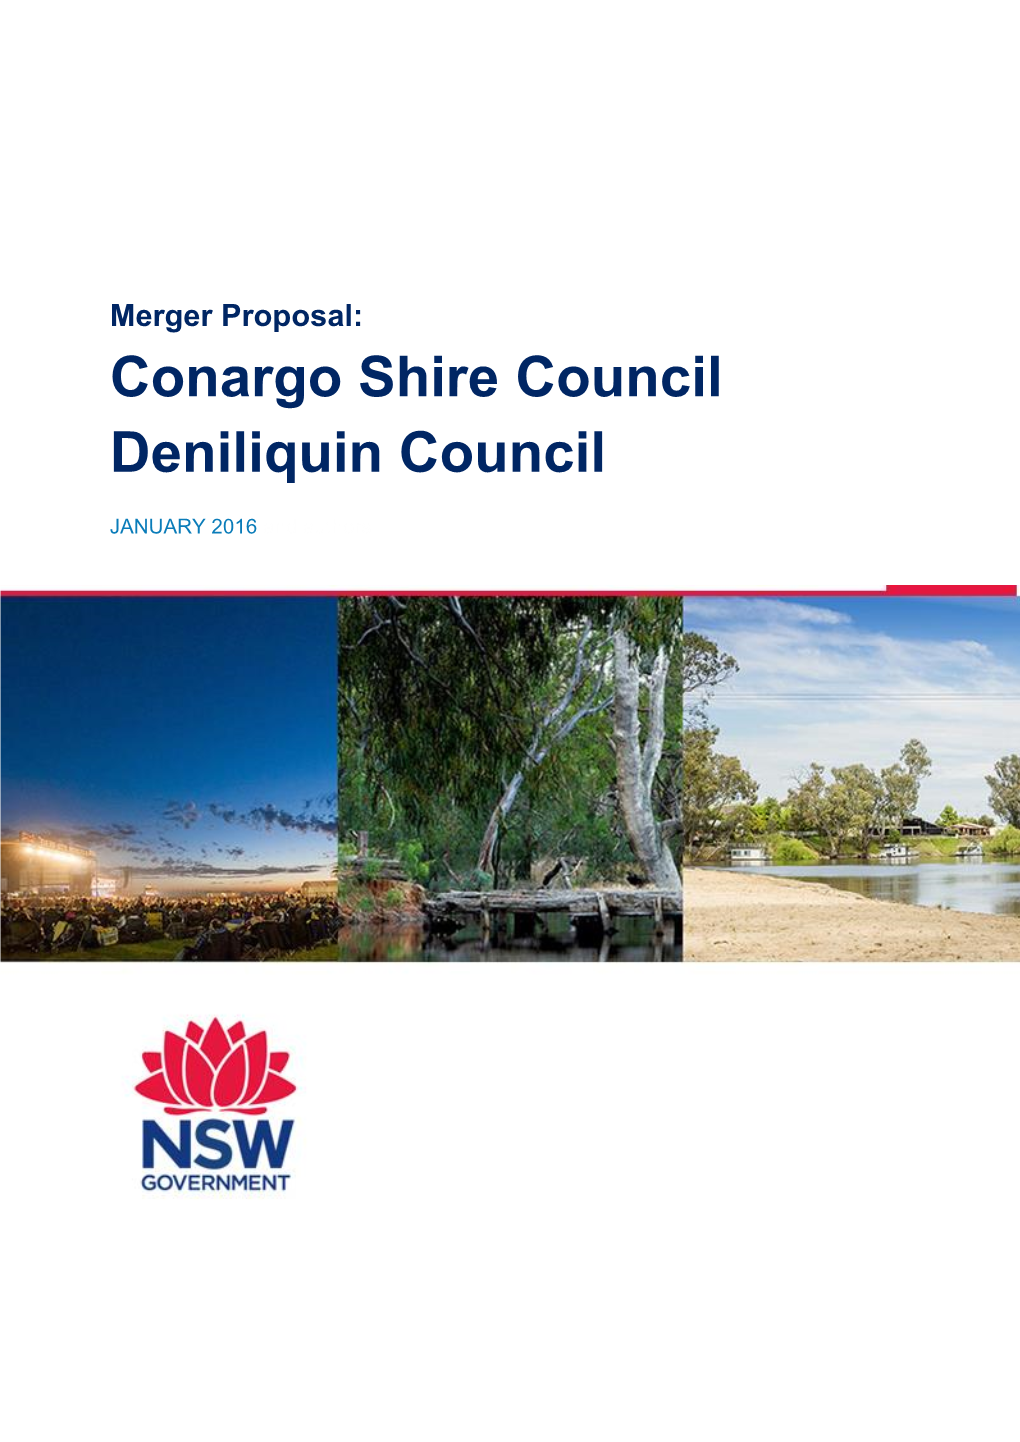 Merger Proposal: Conargo Shire Council, Deniliquin Council